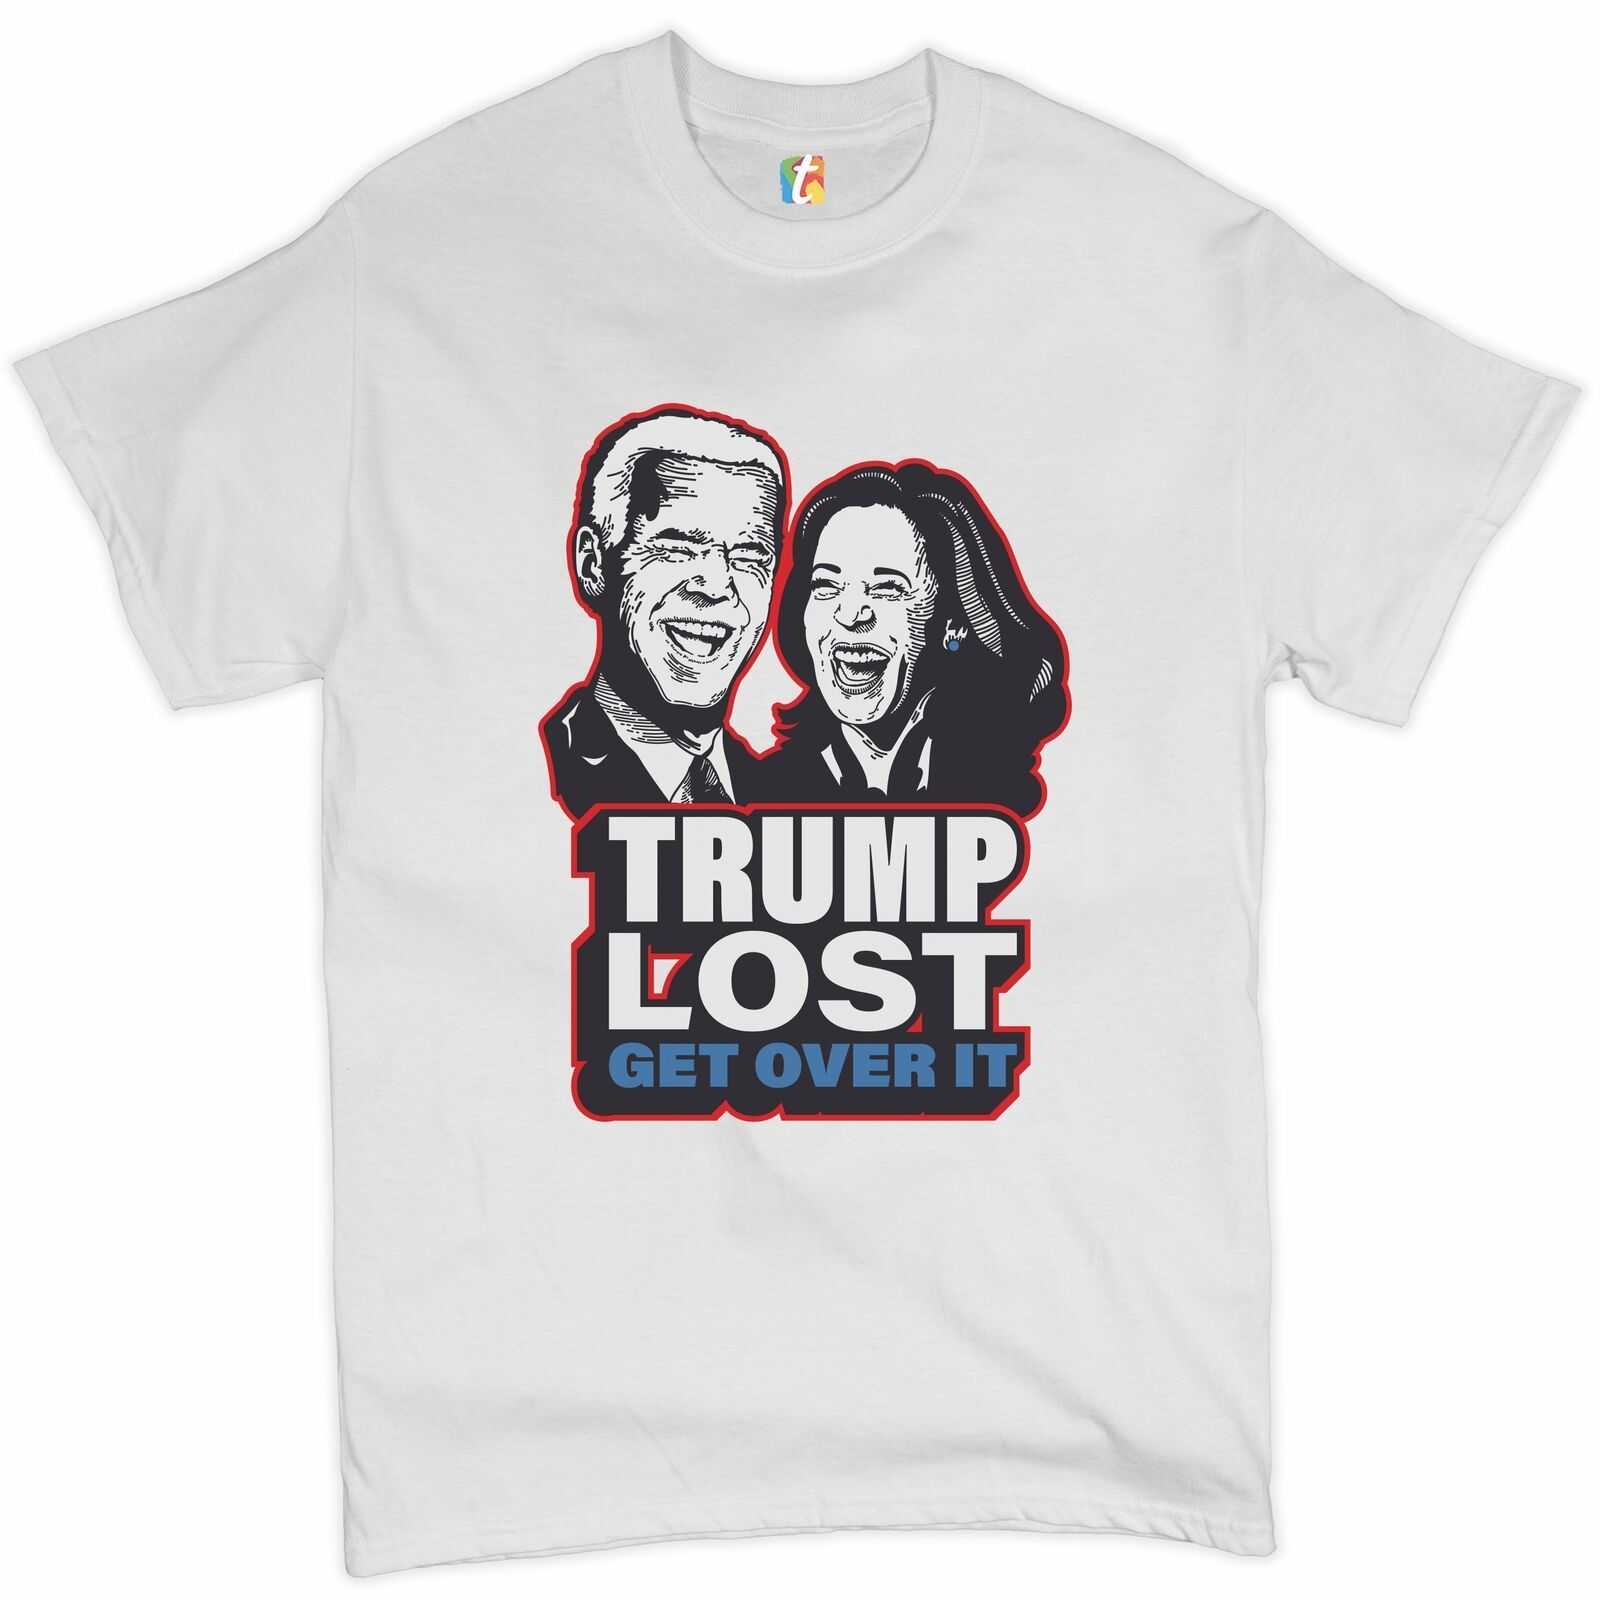 Trump Lost Get Over It T-shirt Laughing Joe Biden Kamala Harris Men's Tee